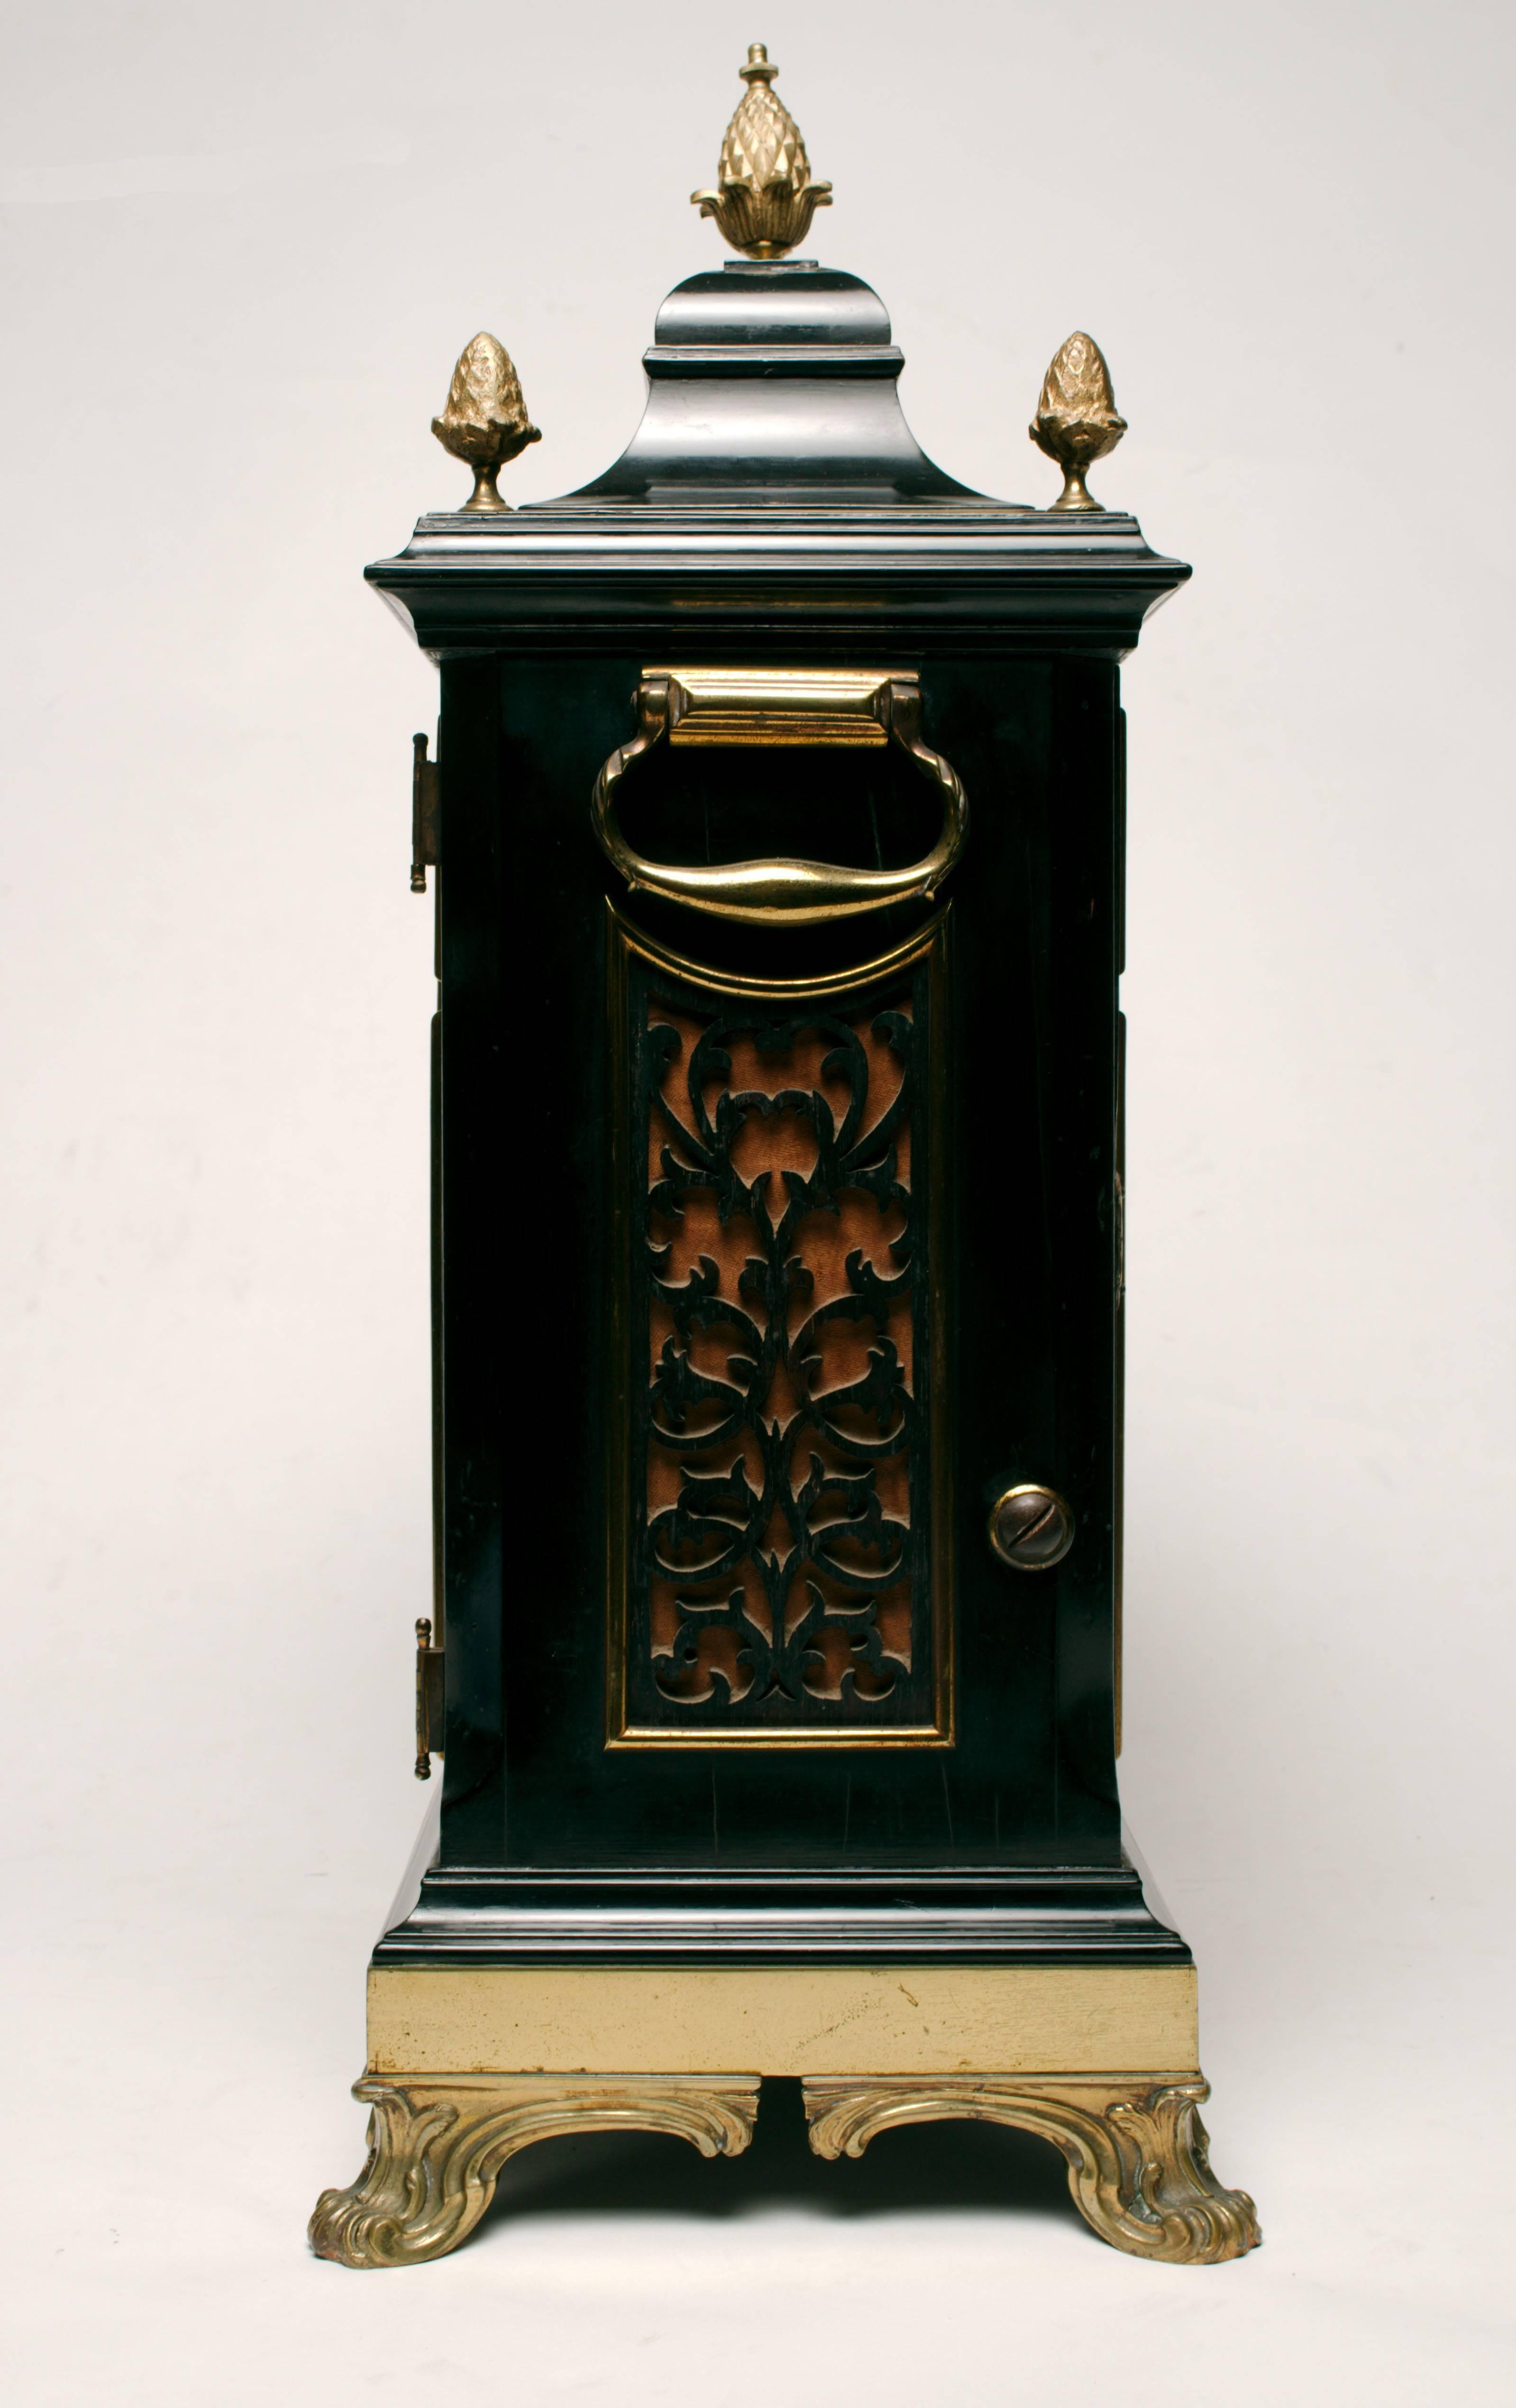 George III Gilt Brass-Mounted Ebonized Bracket Clock by John Ellicot For Sale 1